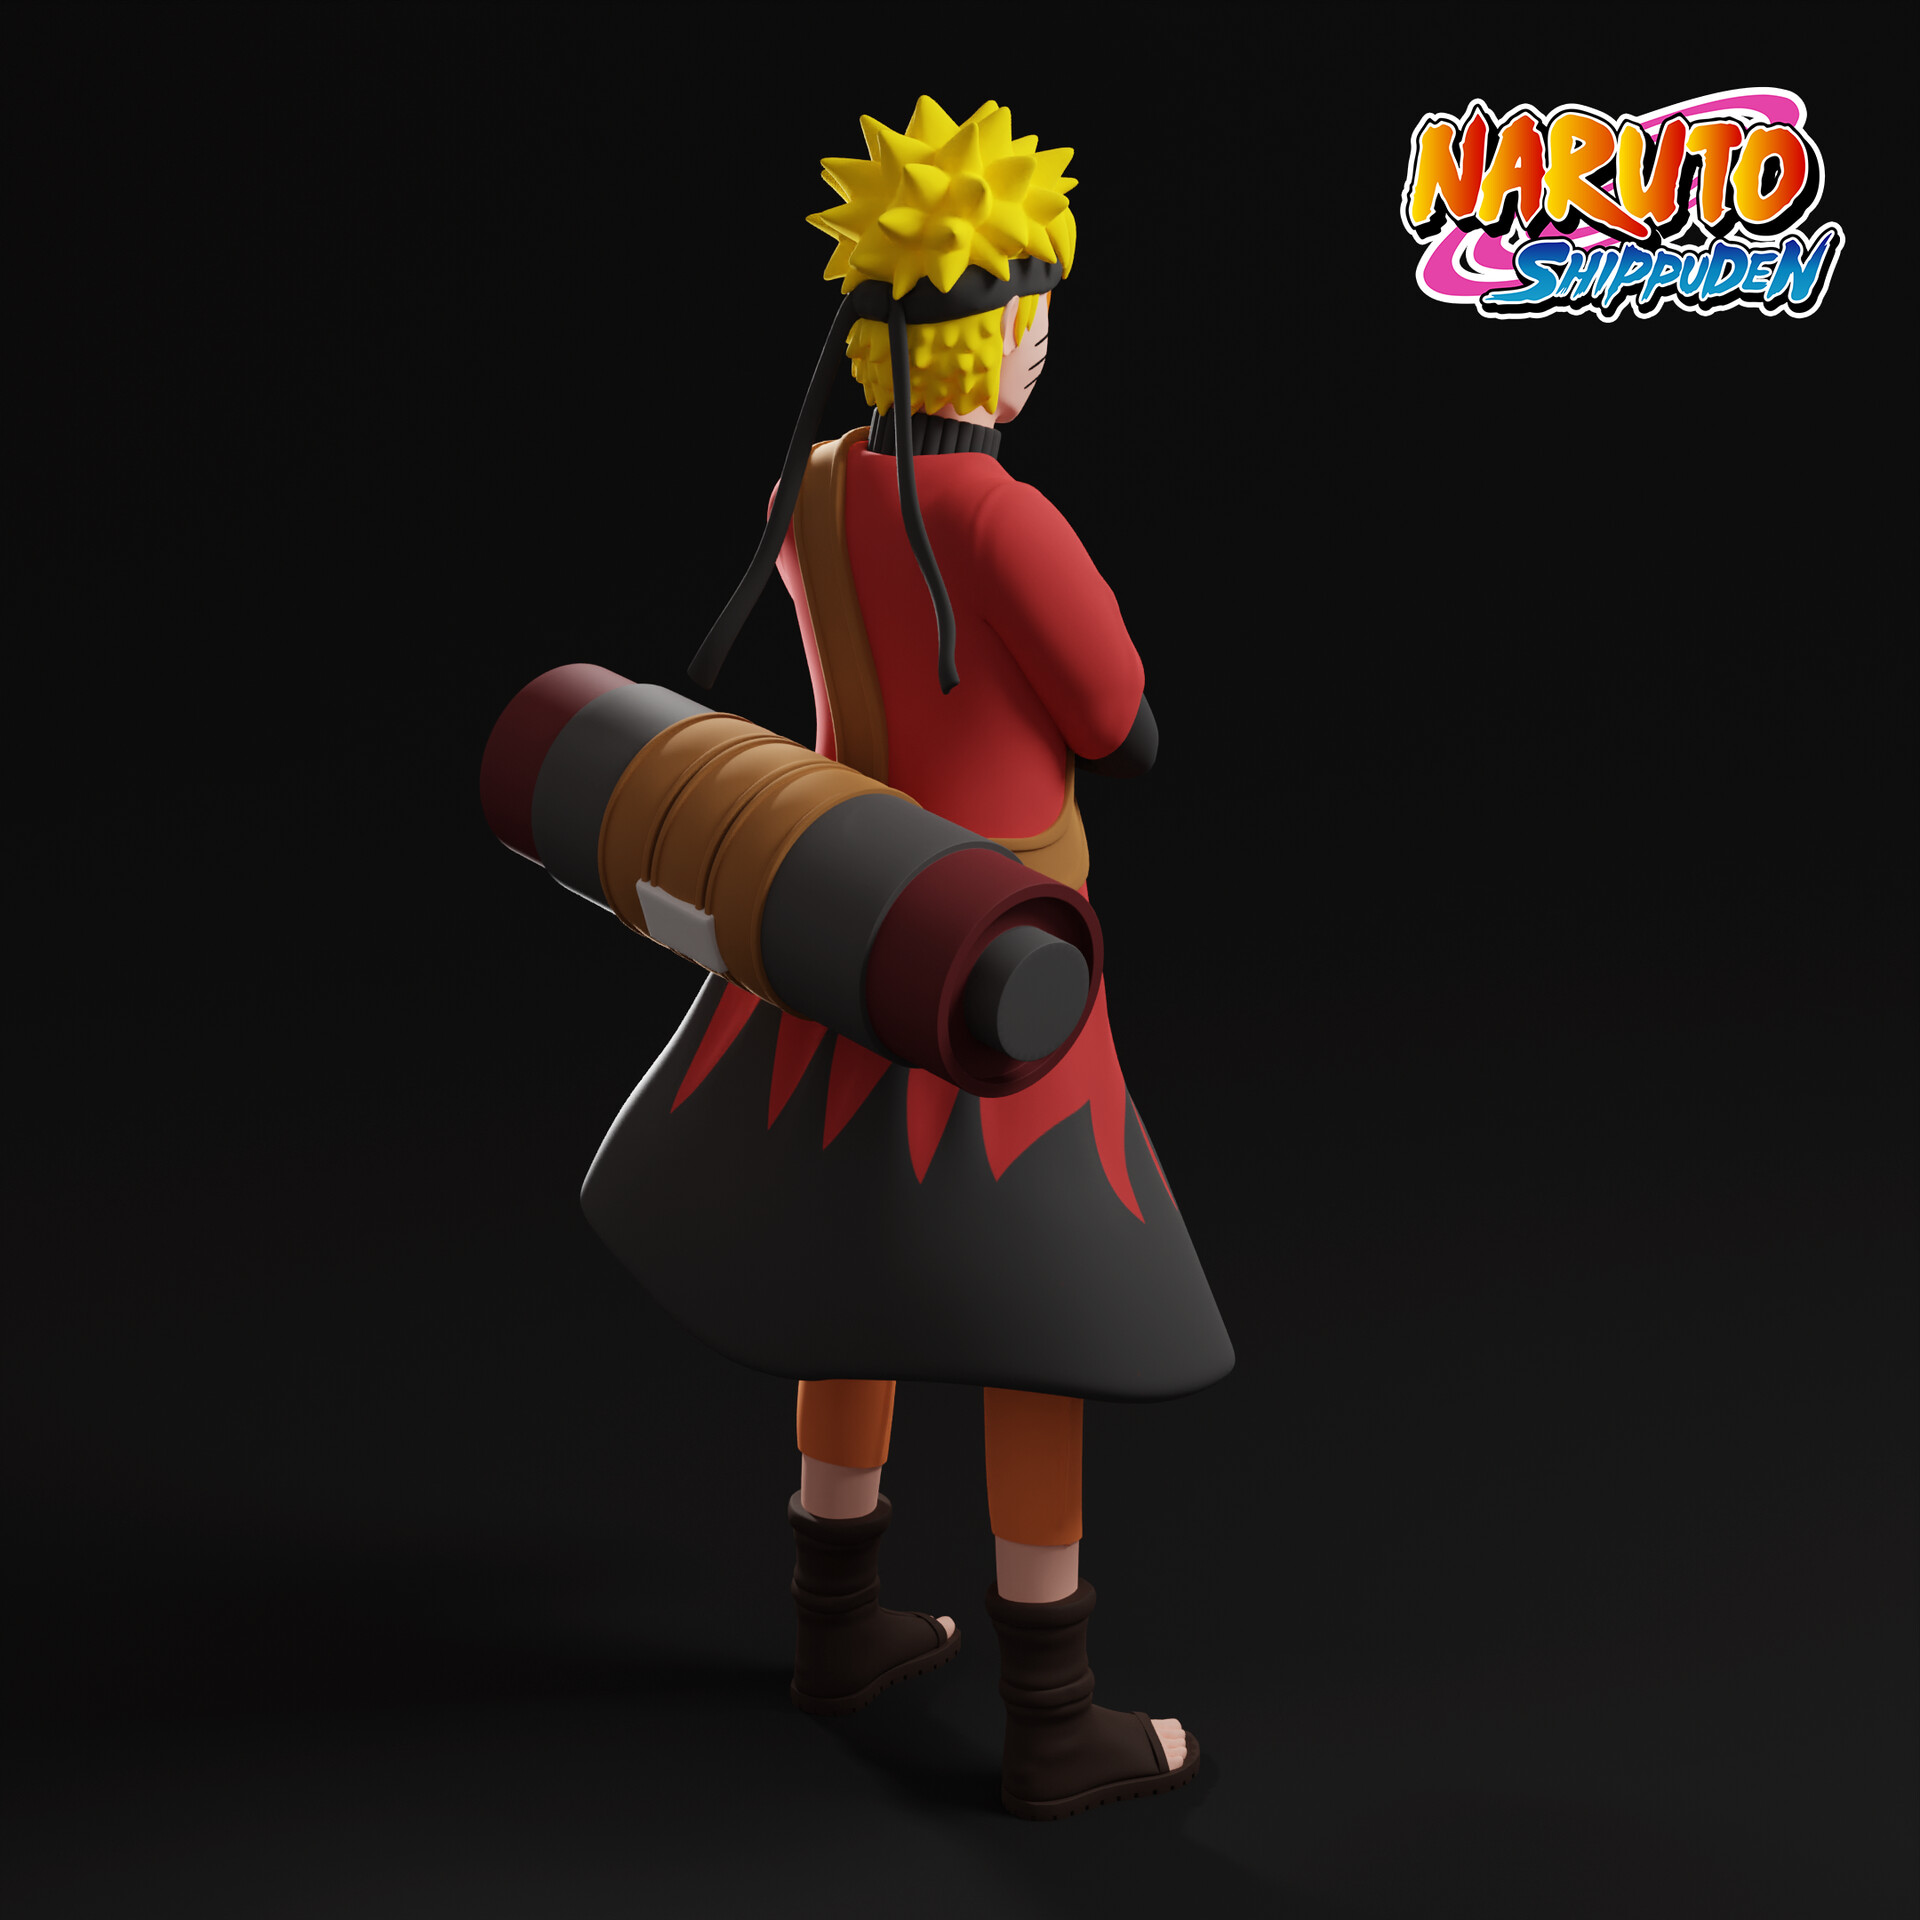 ArtStation - Naruto